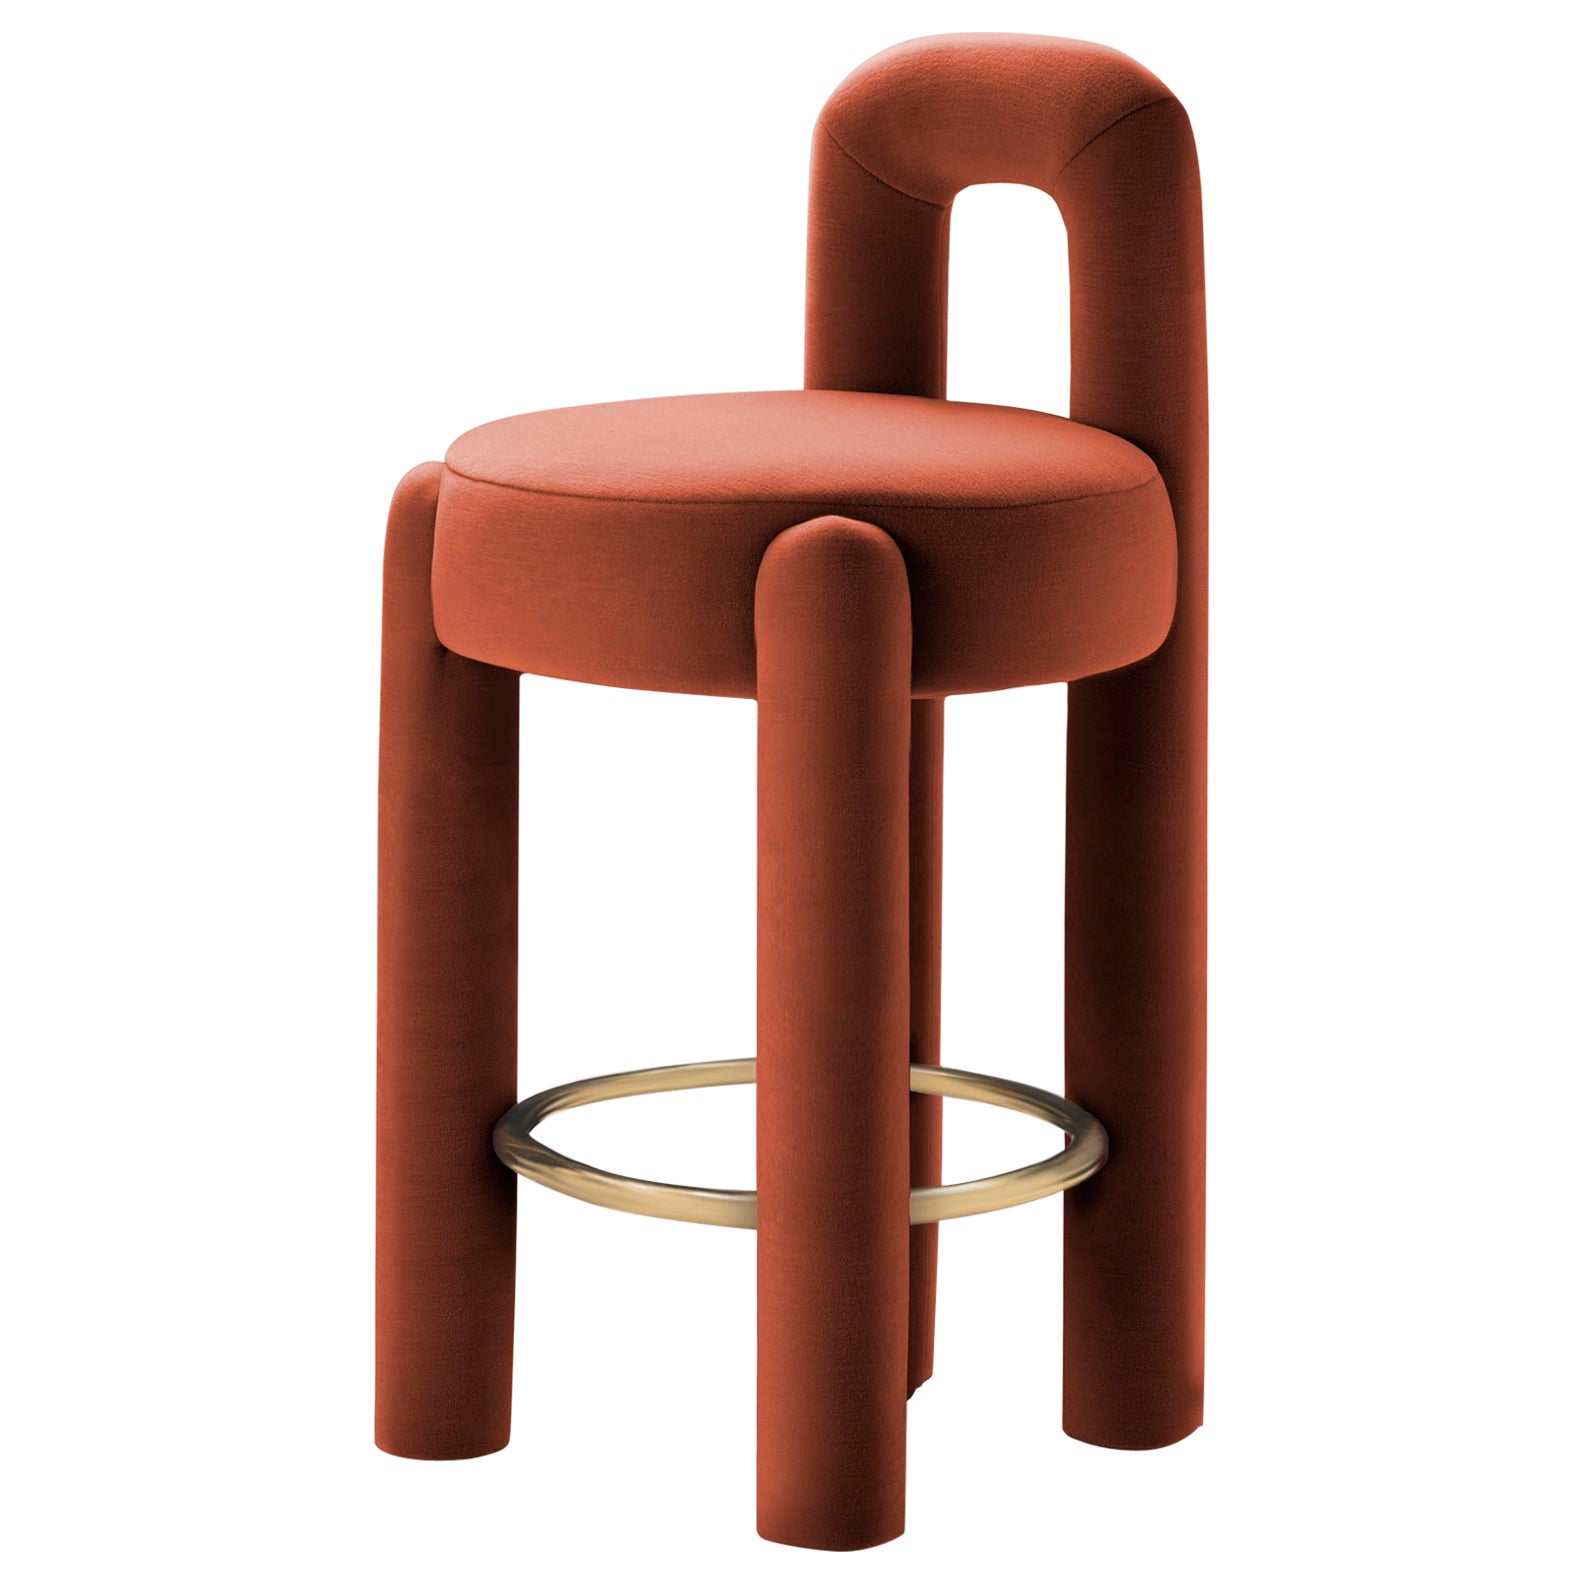 DOOQ! Organic Modern Marlon Counter Chair in Brown Kvadrat by P. Franceschini For Sale